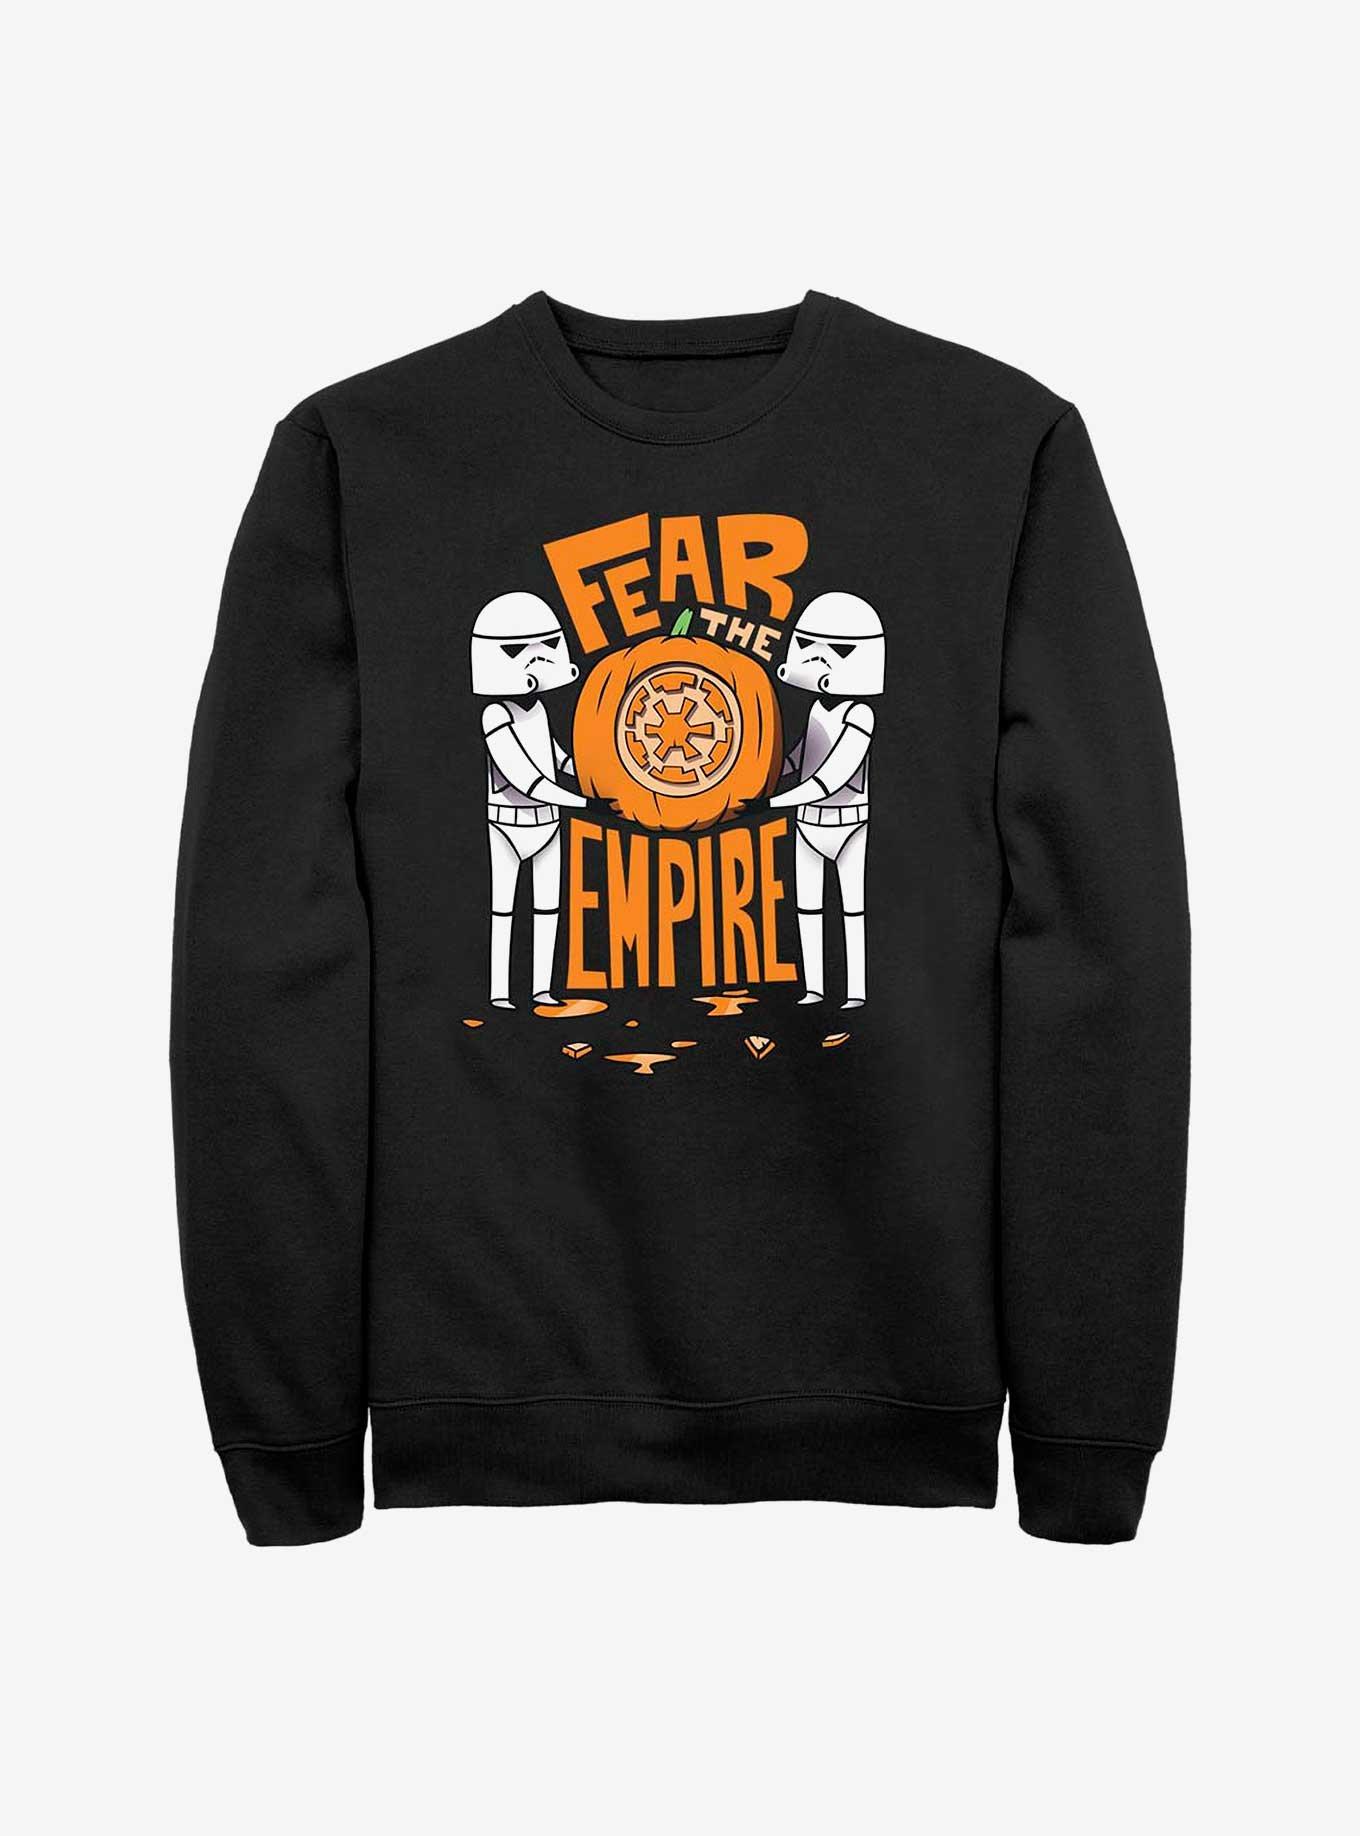 Star Wars Fear The Empire Sweatshirt, , hi-res